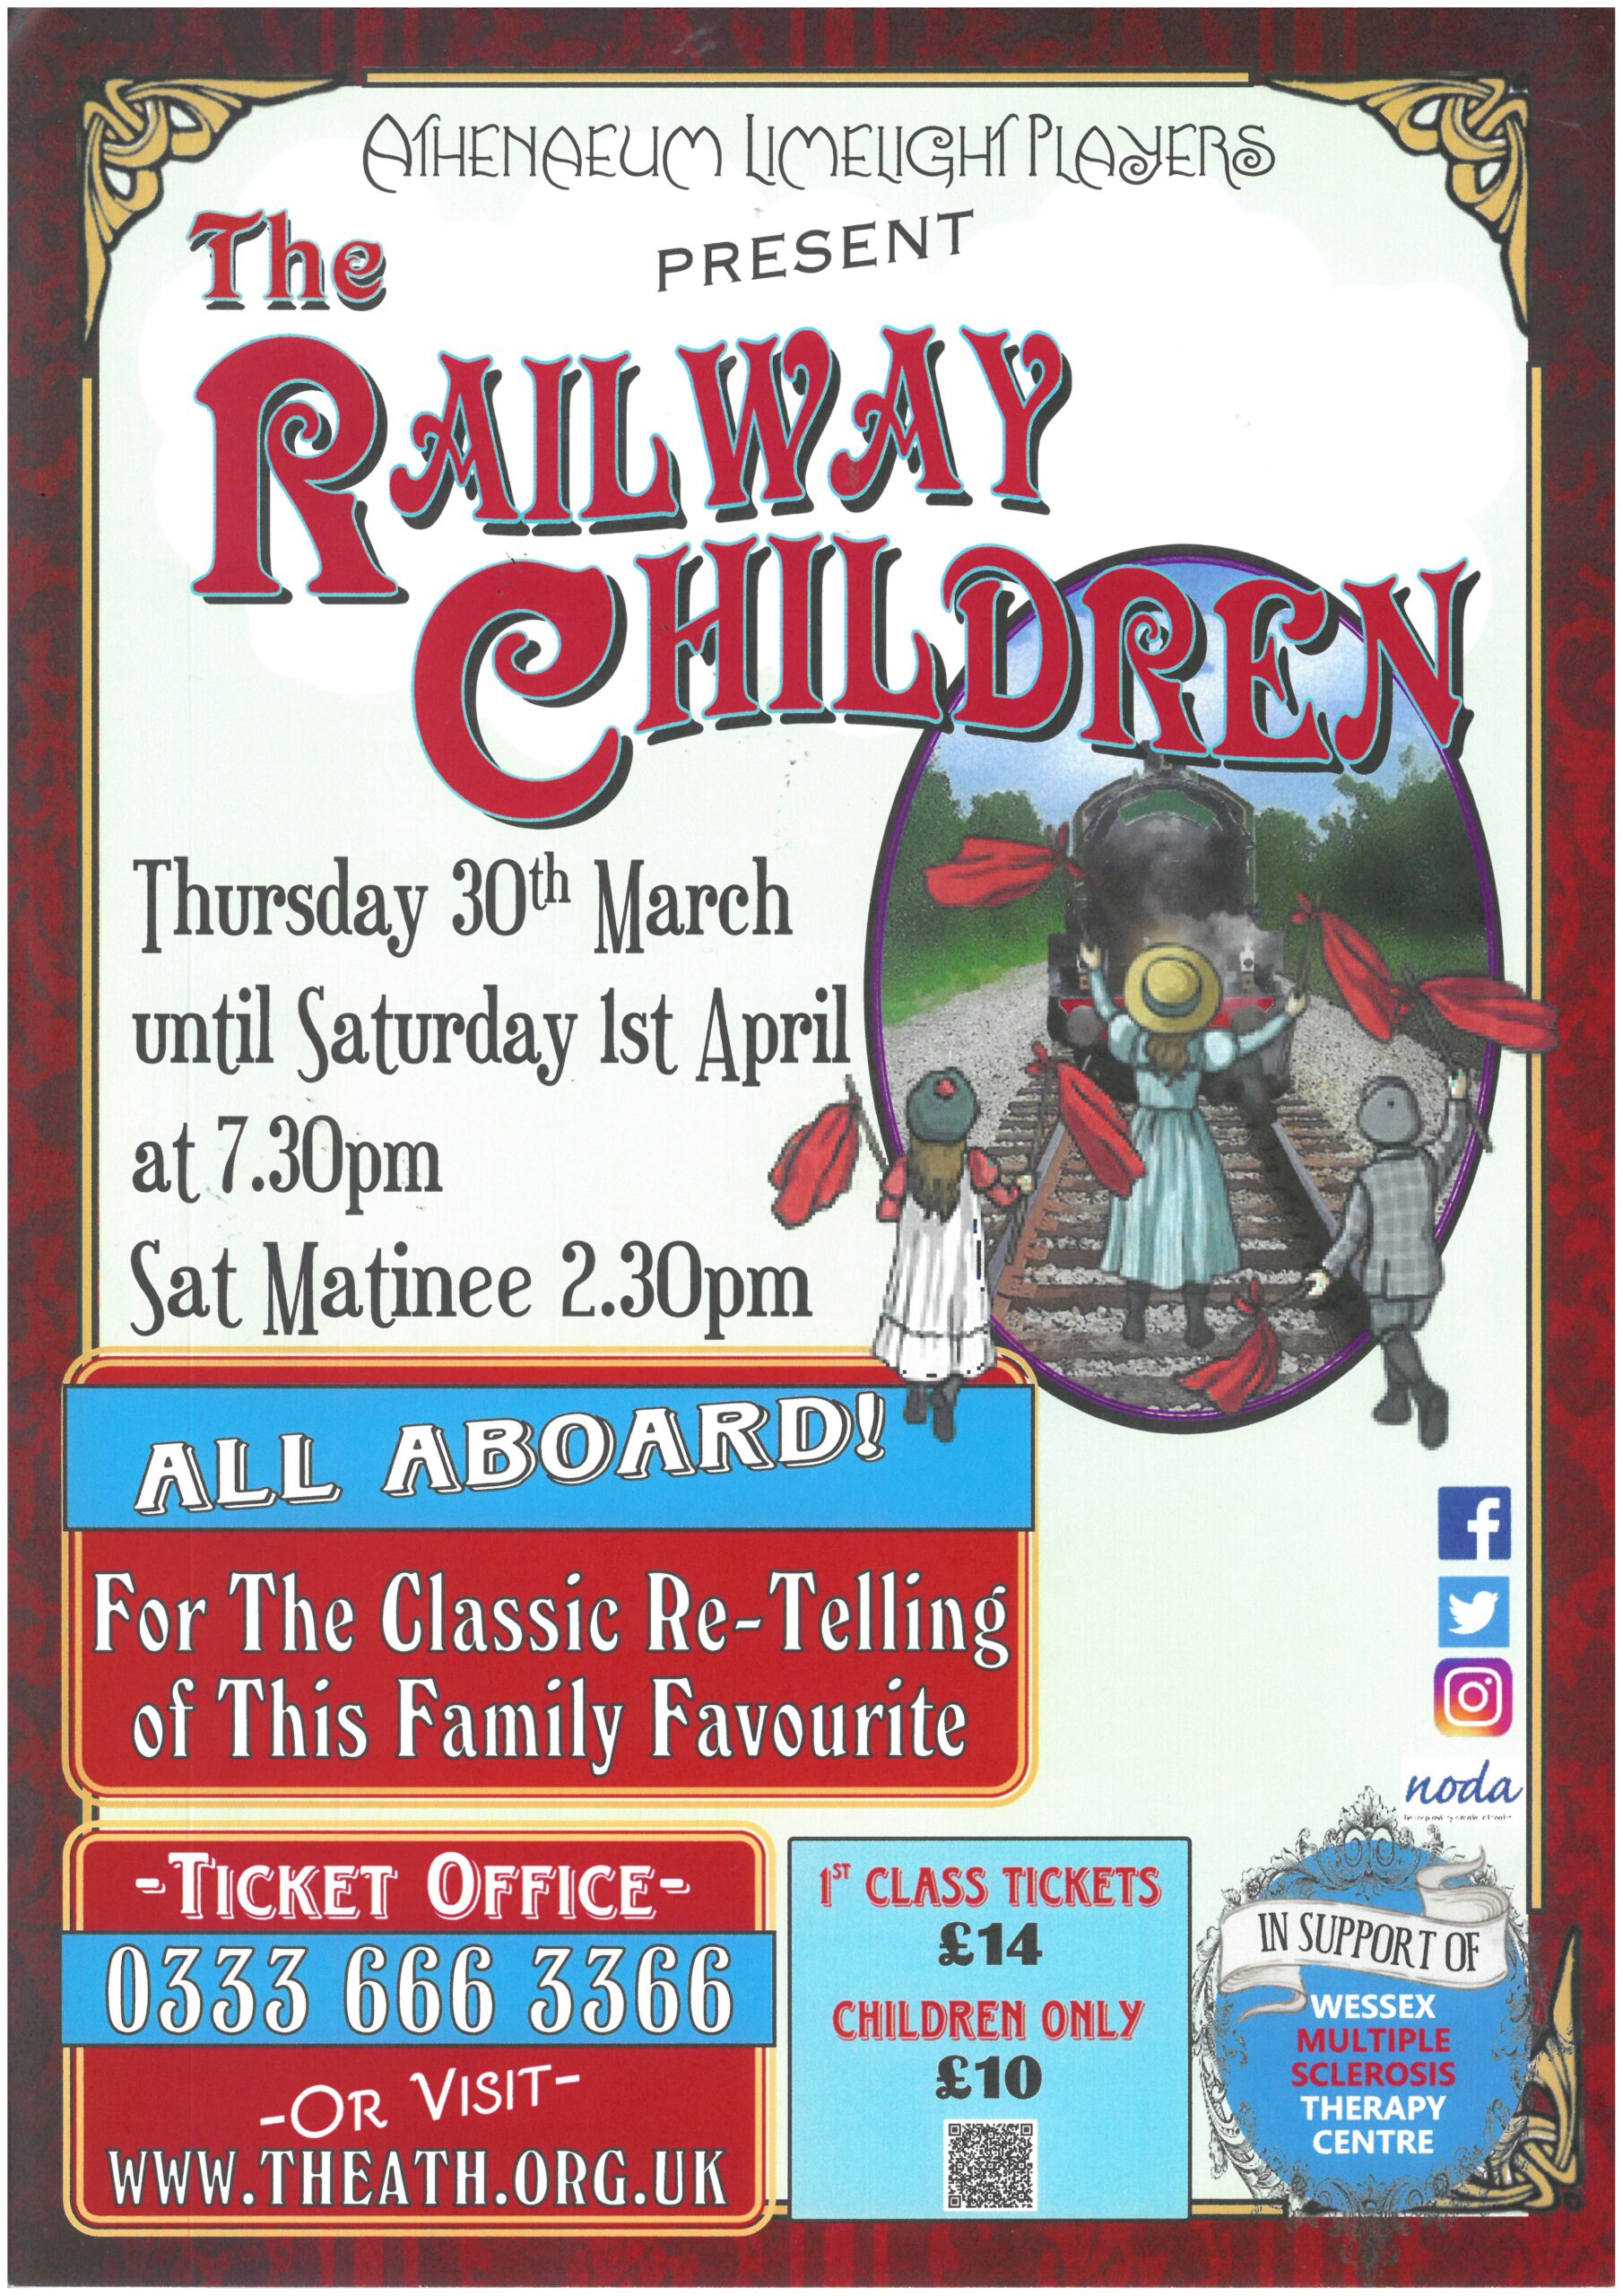 Athenaeum Limelight Players present 'The Railway Children'